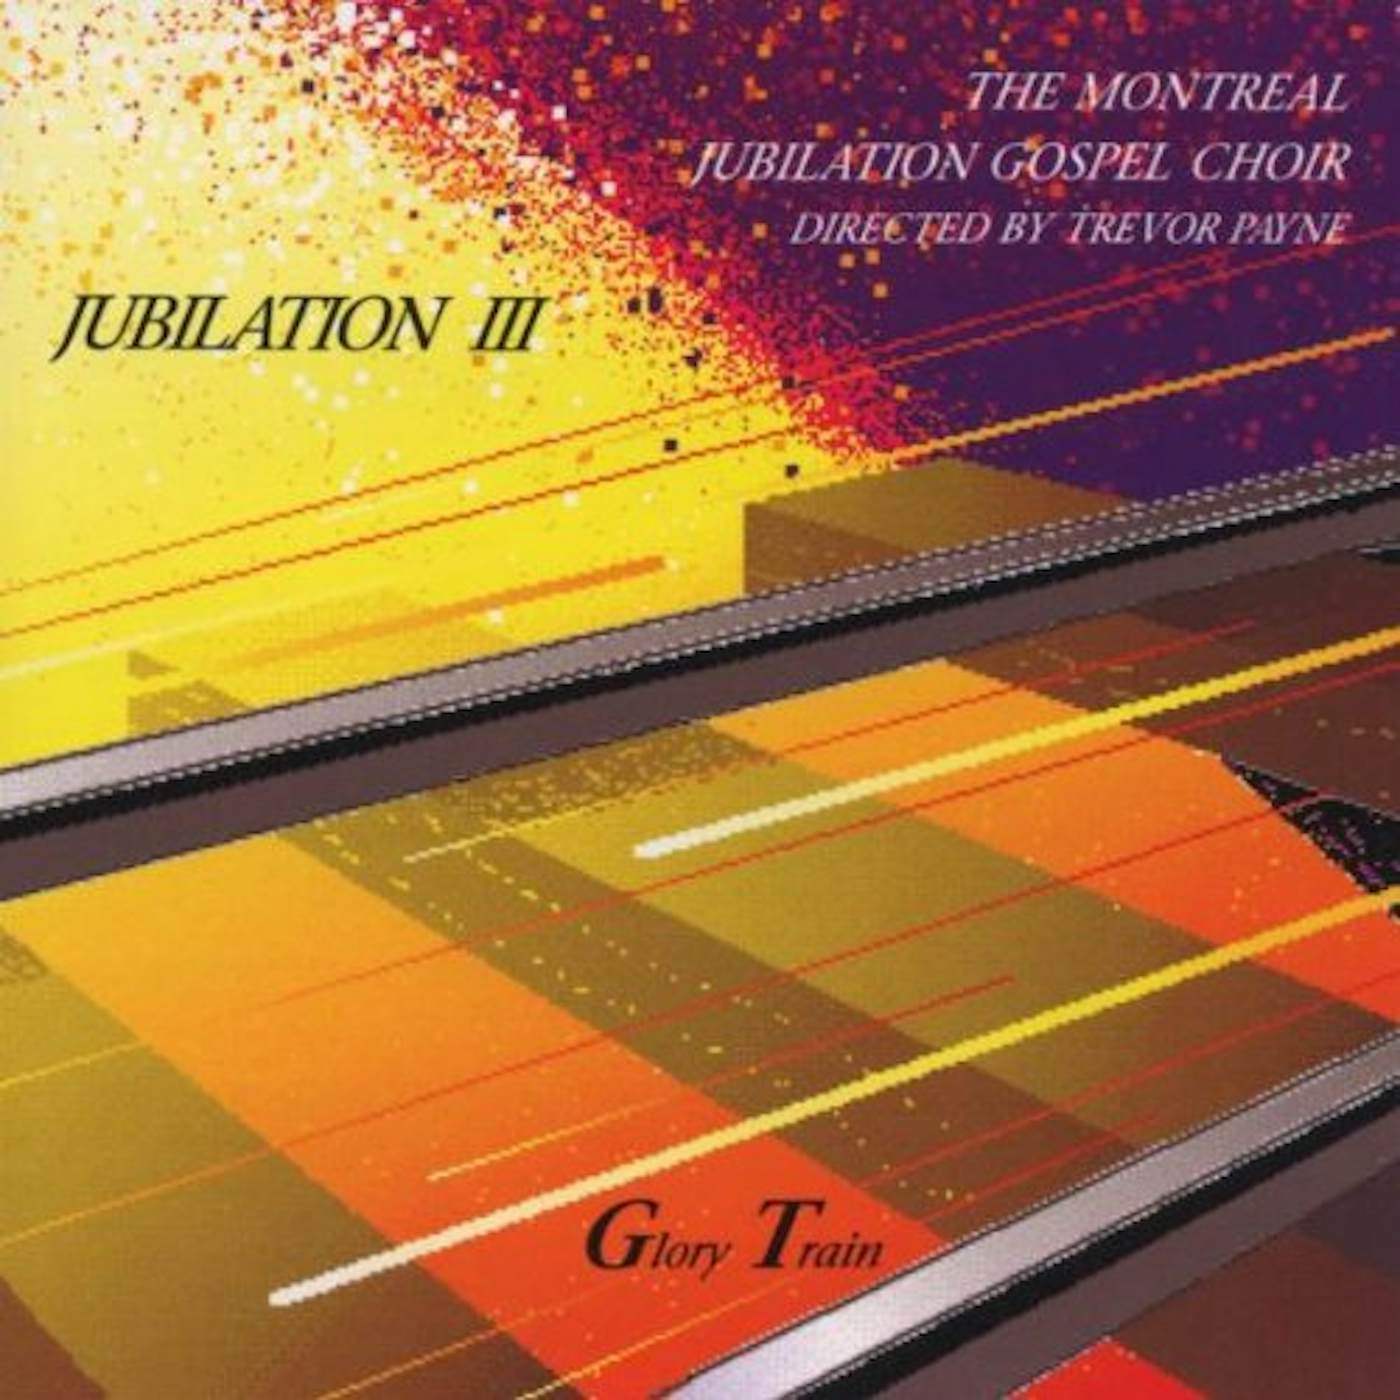 Montreal Jubilation Gospel Choir JUBILATION 3: GLORY TRAIN CD